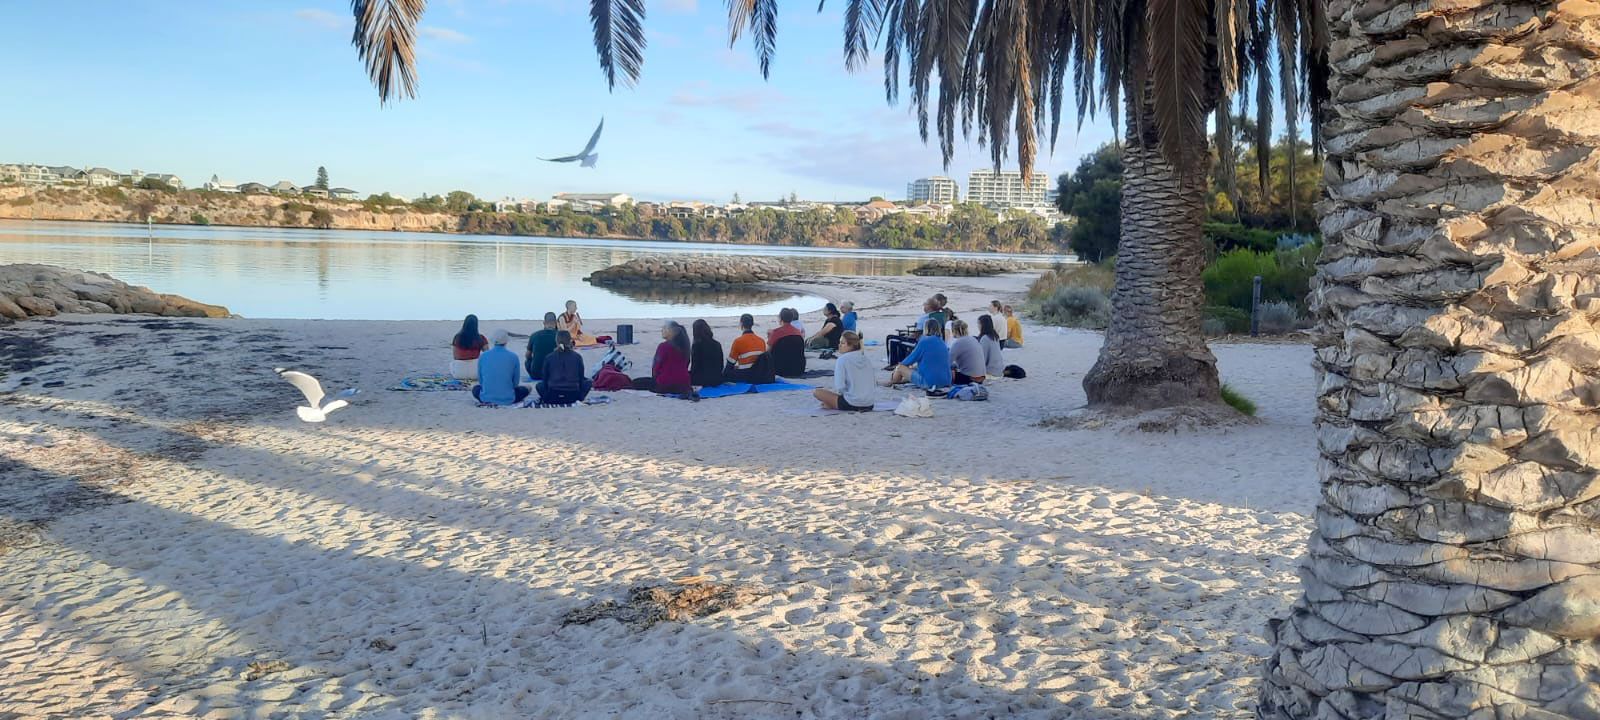 Perth-Australia-meditate-by-the-river